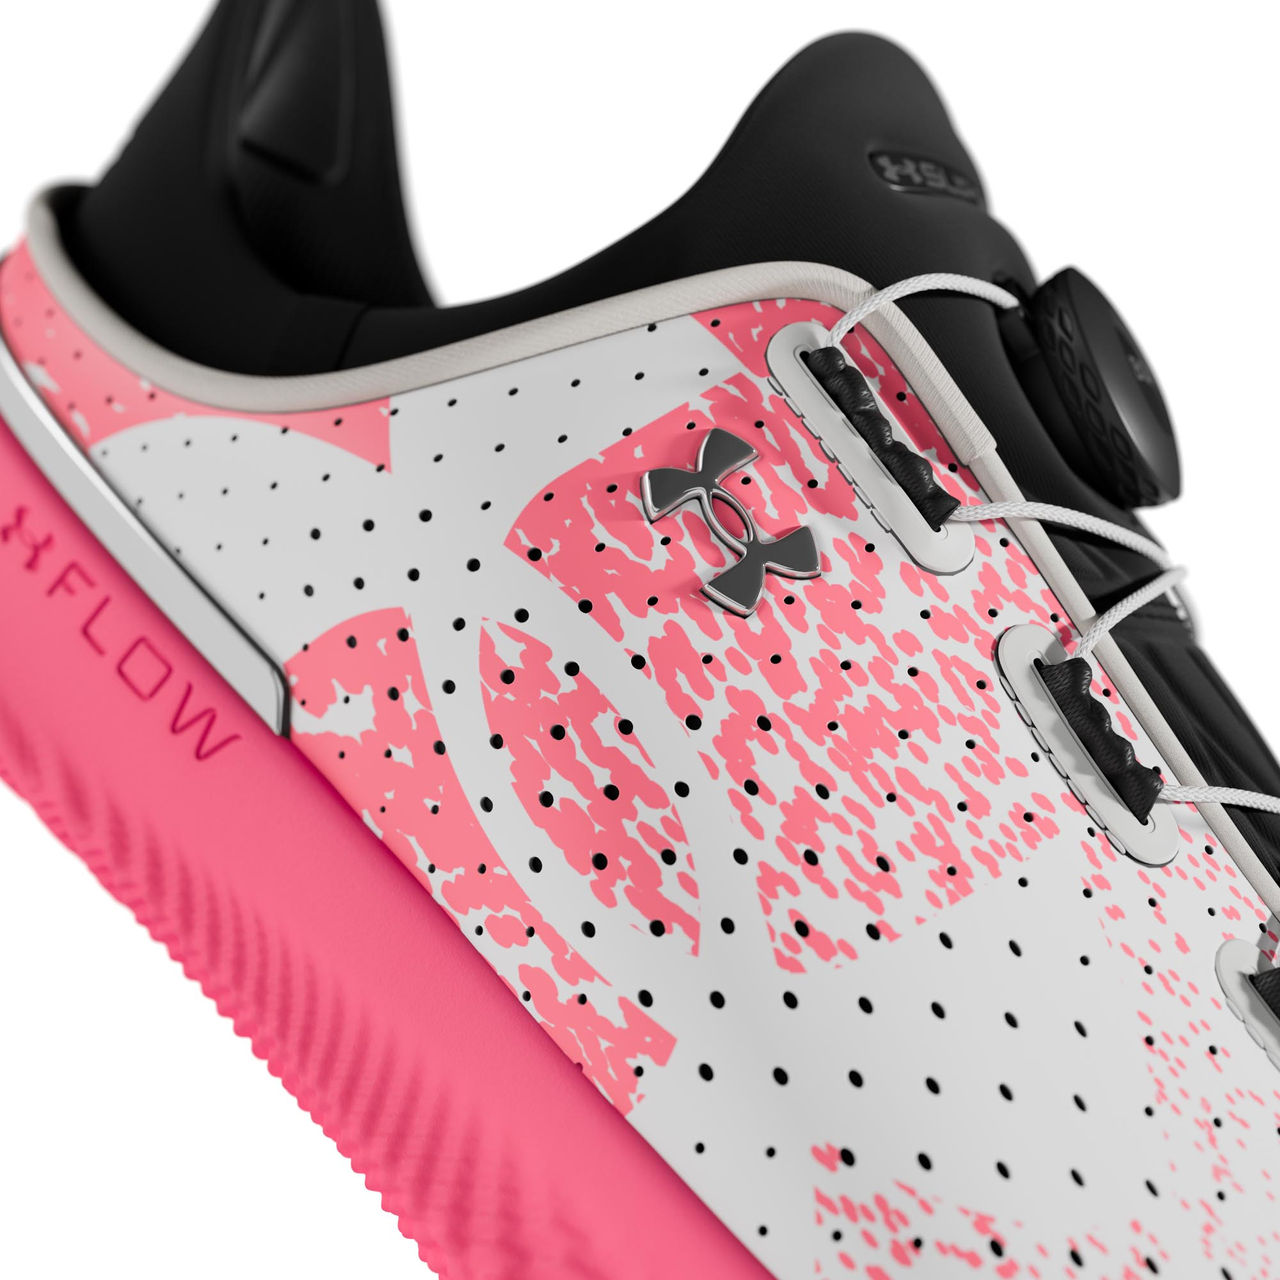 Introducing UA SlipSpeed, Under Armour's Most Versatile Training Shoe  Designed for Athletes